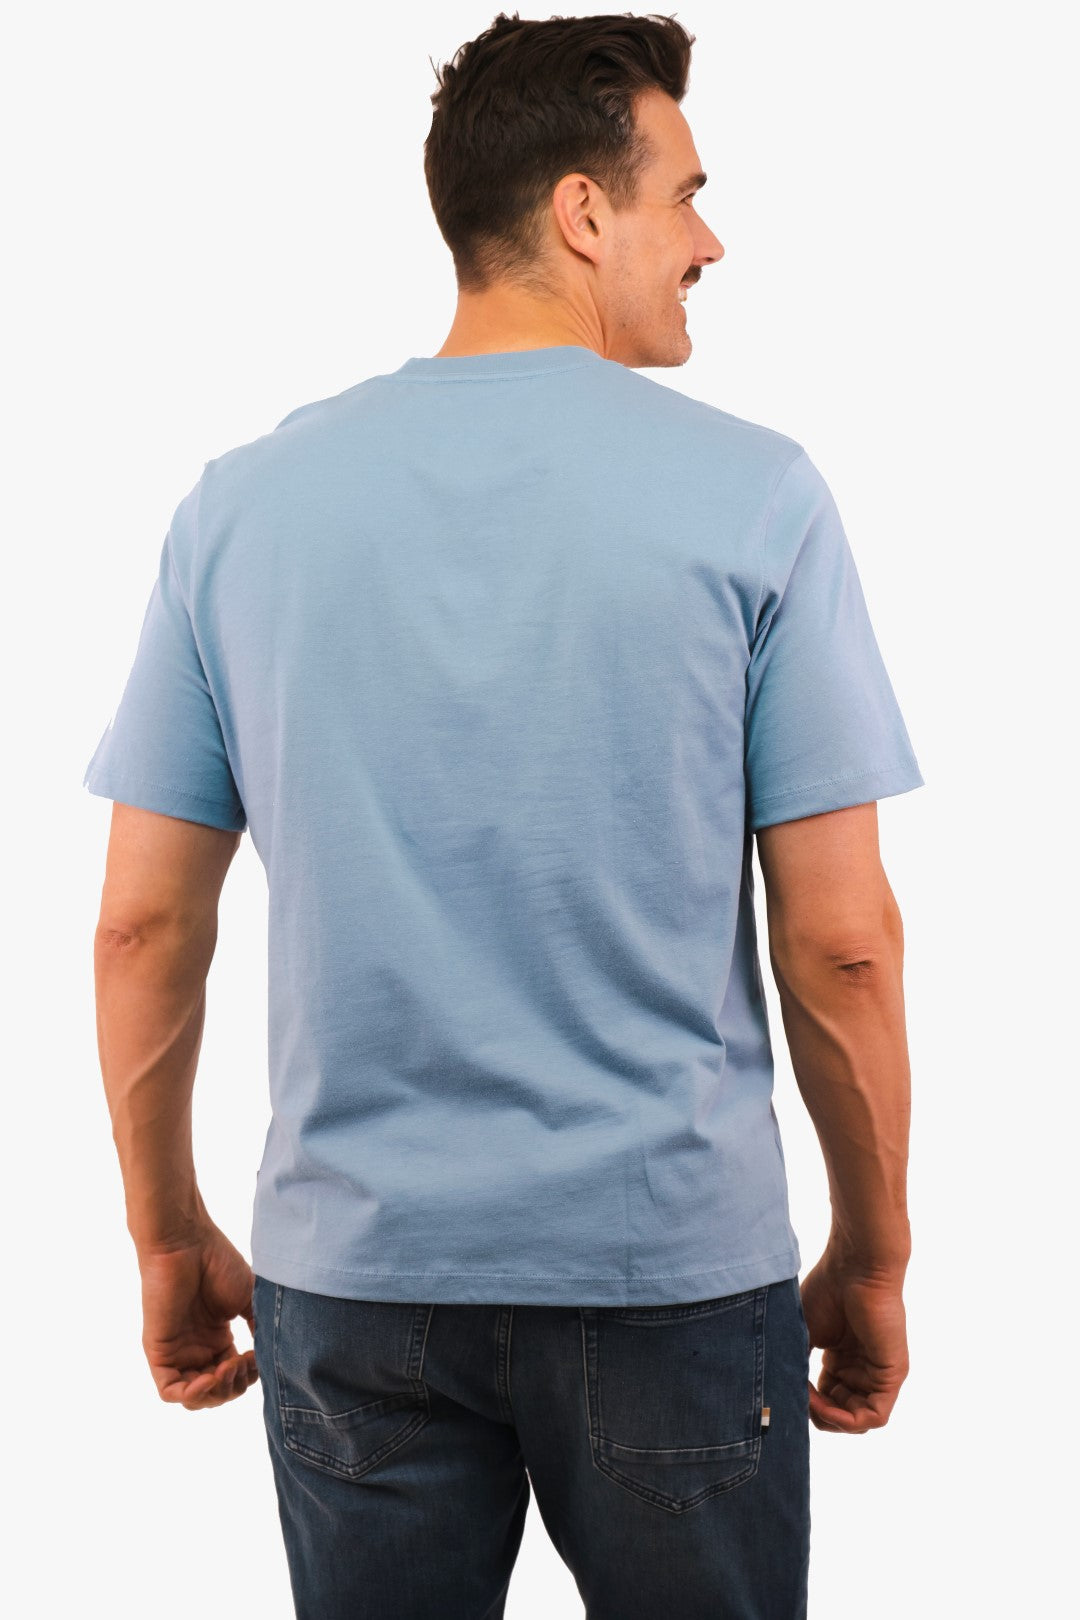 T-Shirt Logo Michael Kors de couleur Bleu